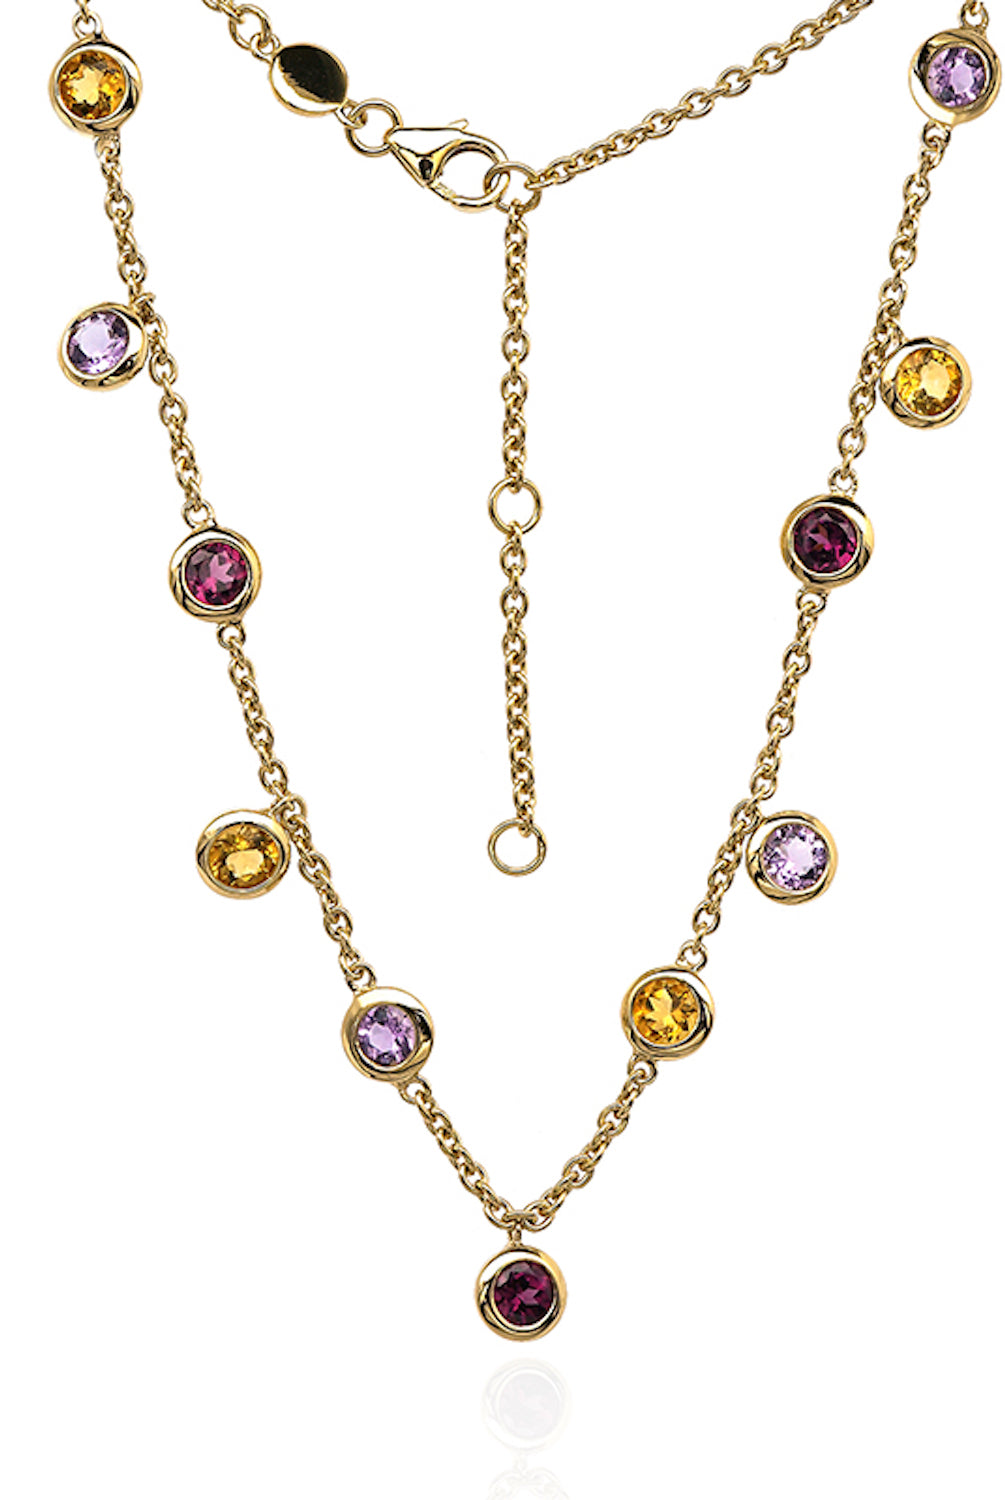 Marbella gemstone pendant necklace with amethyst, citrine and rhodolite garnet.